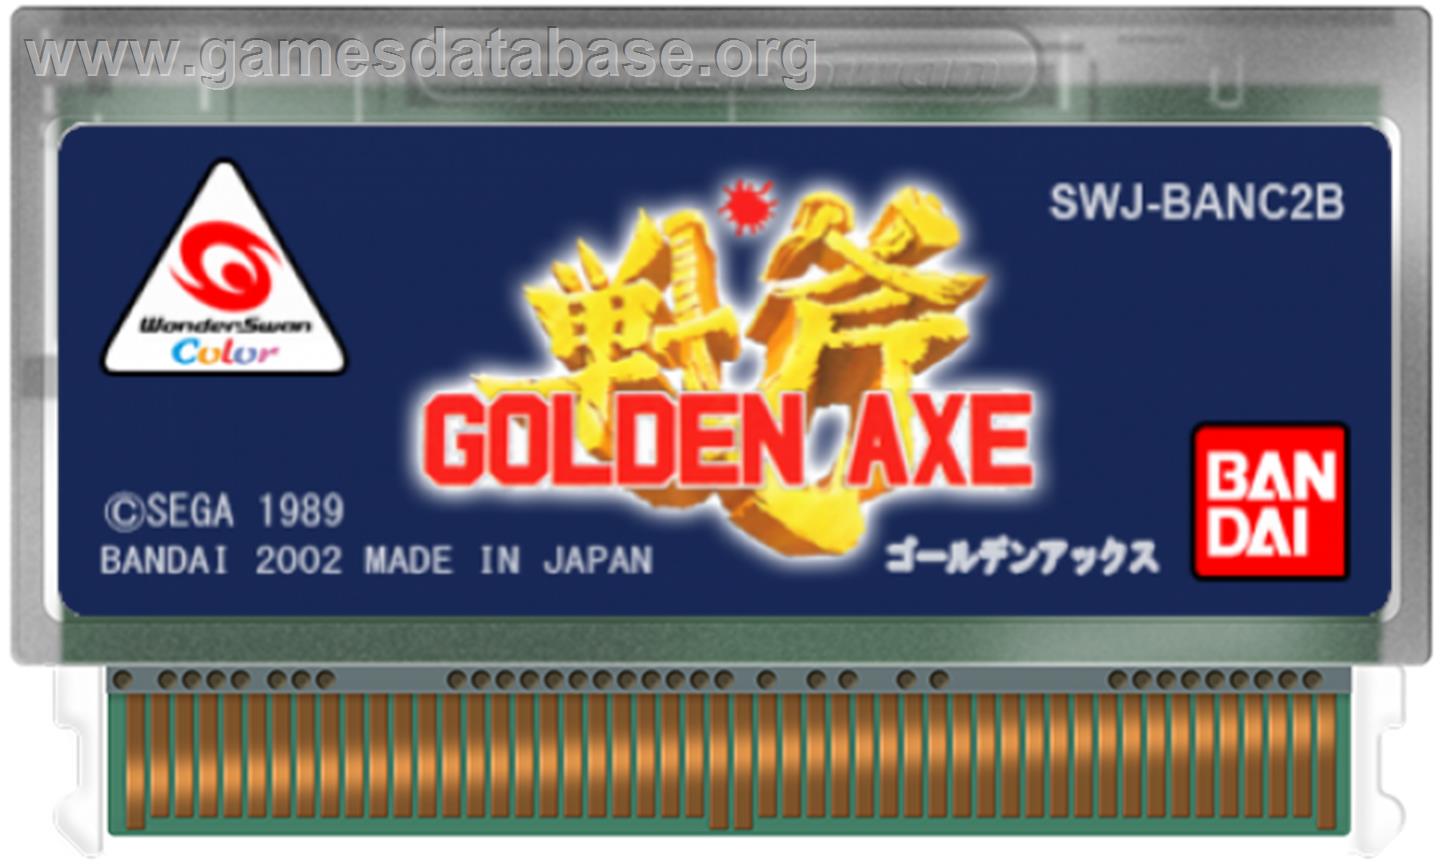 Golden Axe - Bandai WonderSwan Color - Artwork - Cartridge